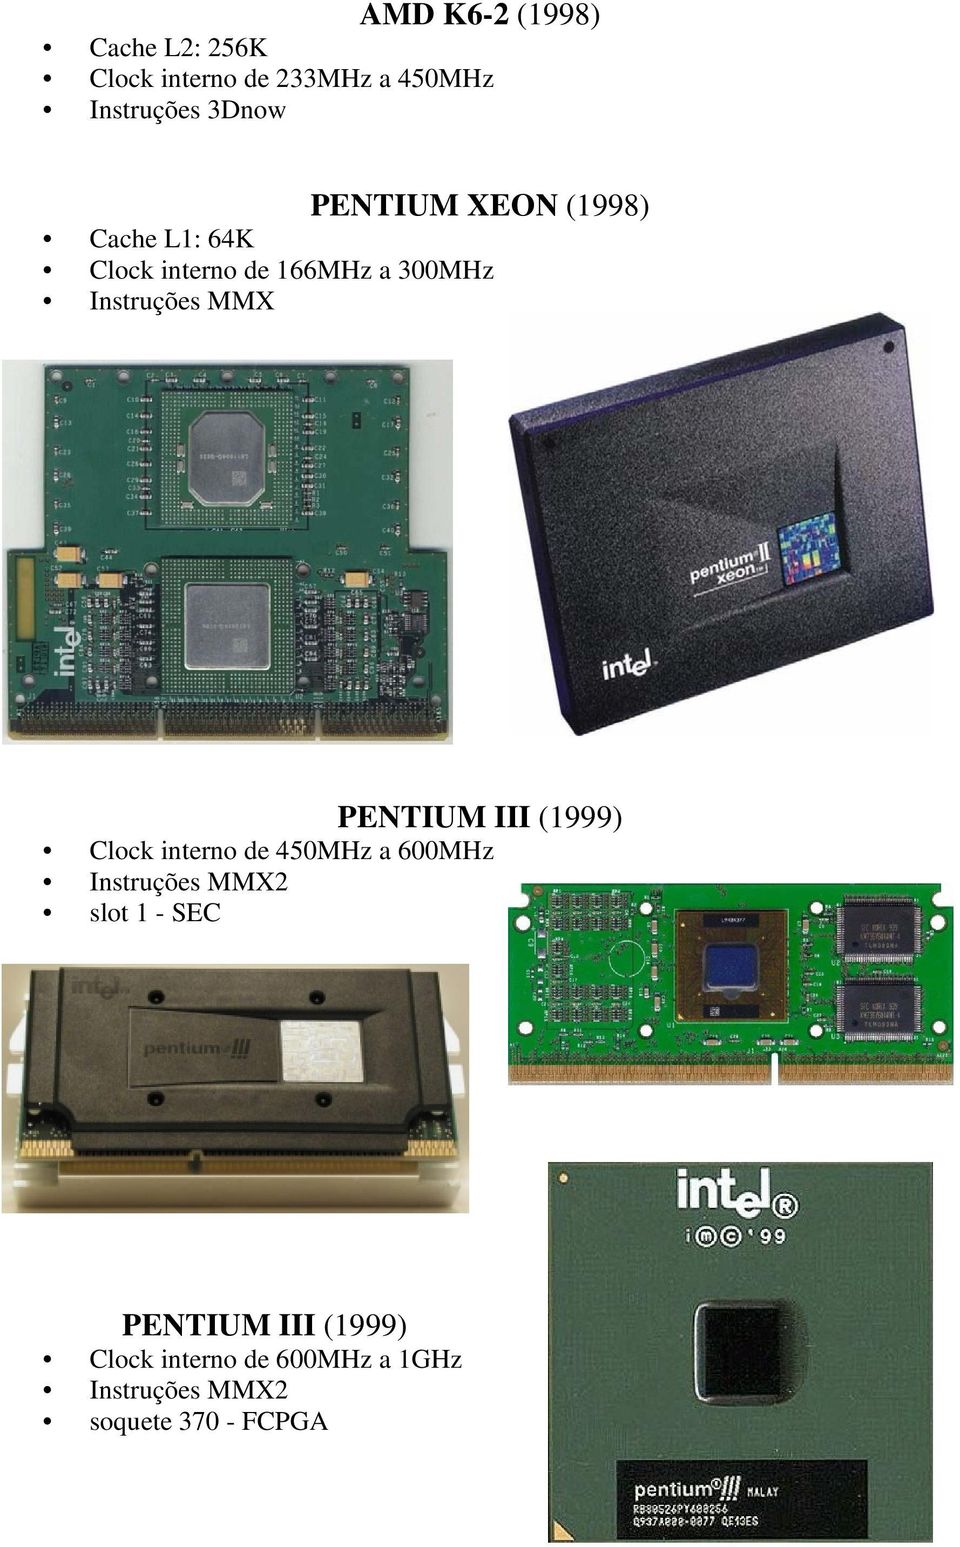 PENTIUM III (1999) Clock interno de 450MHz a 600MHz Instruções MMX2 slot 1 - SEC